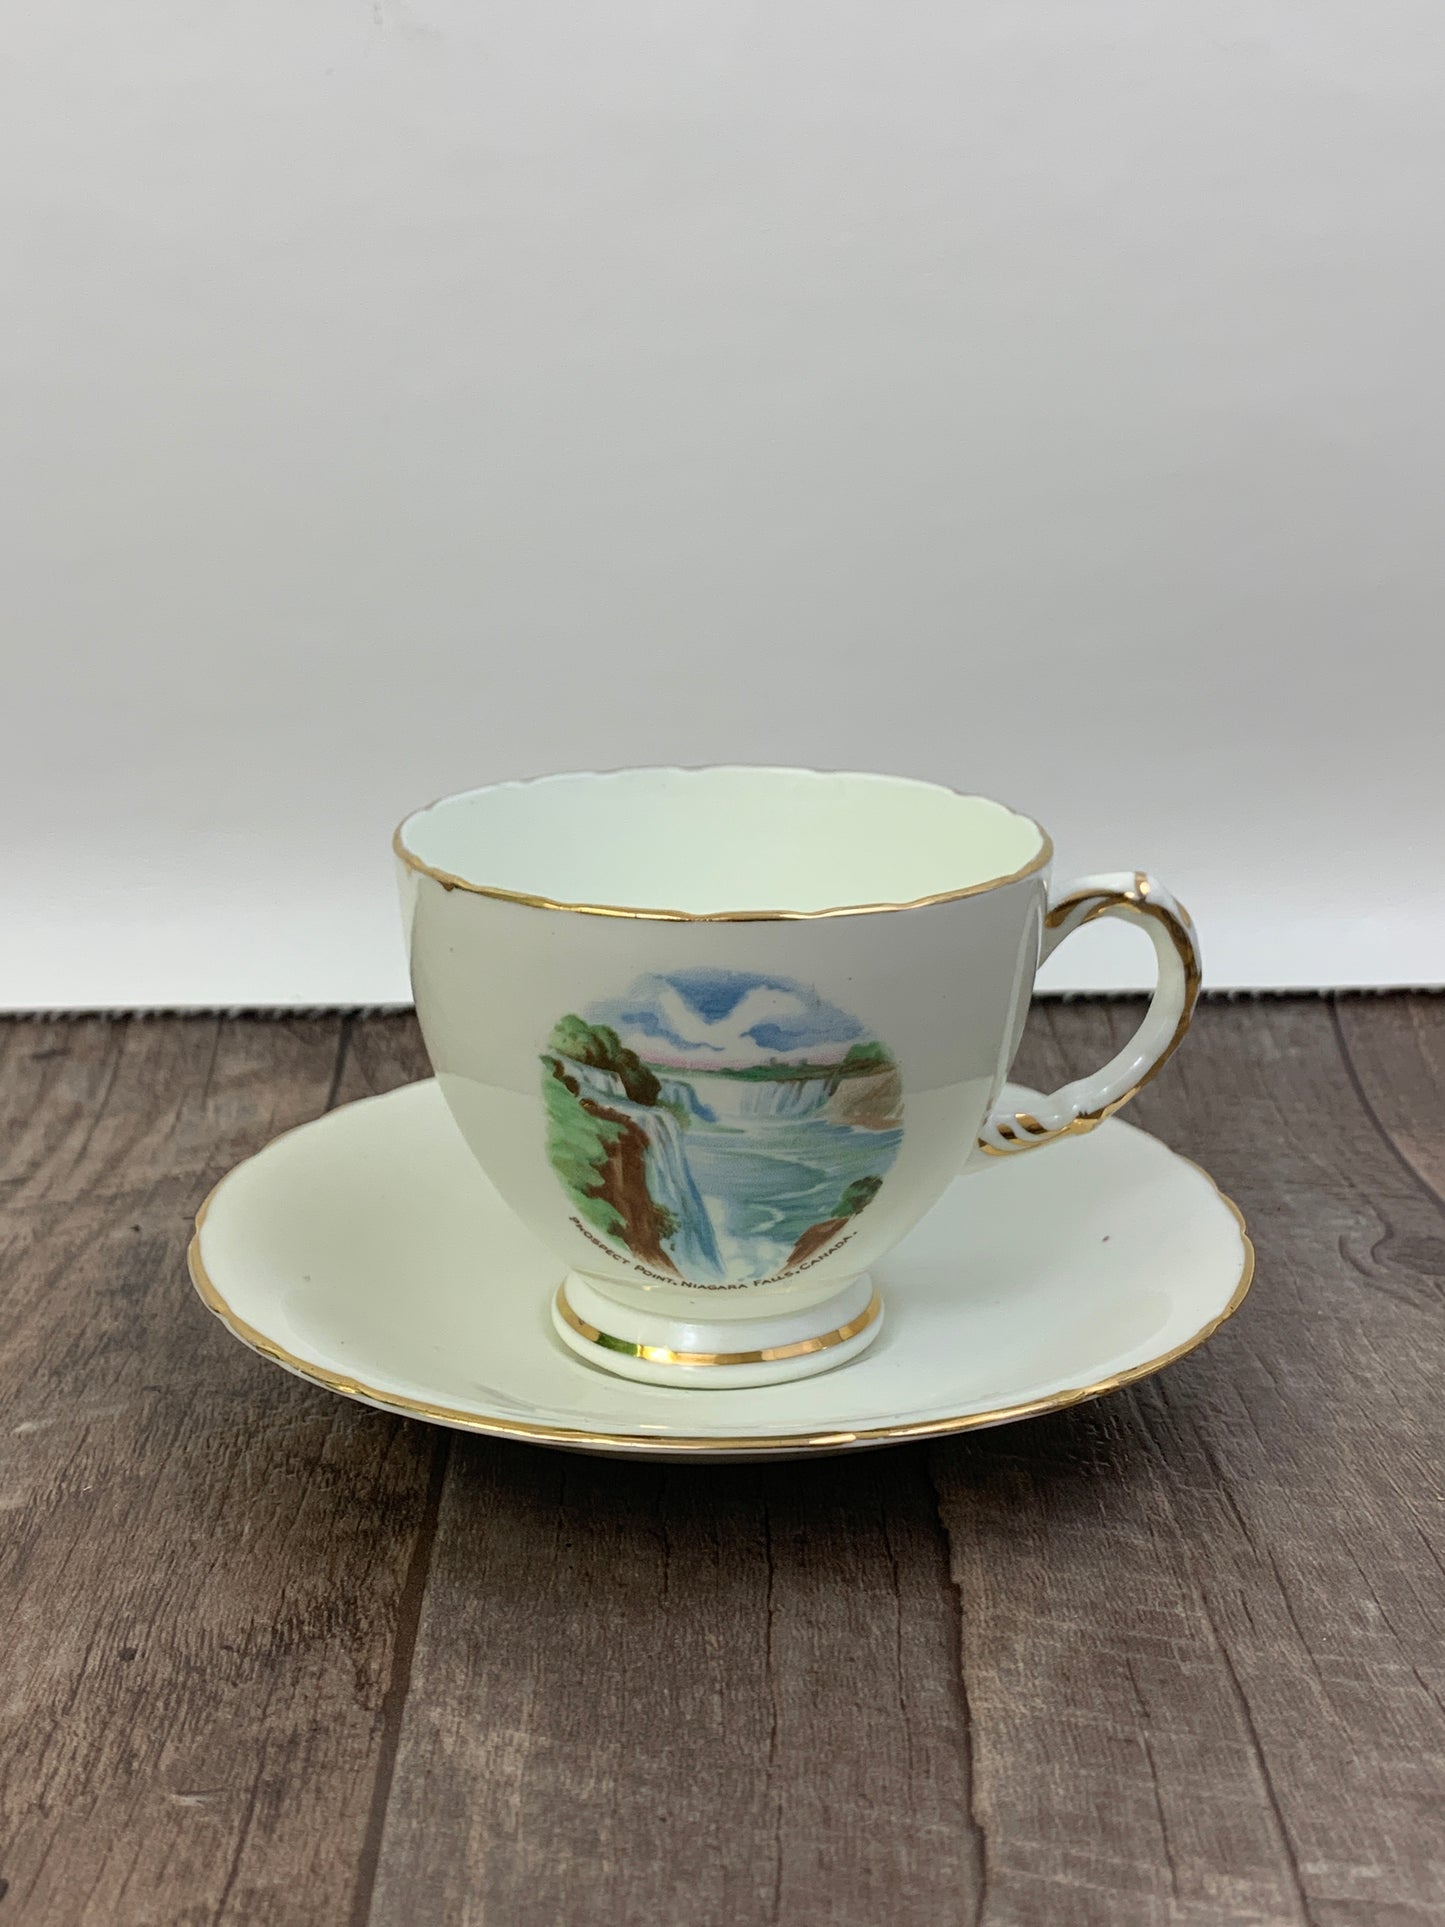 Vintage Teacup with Scenes from Niagara Falls, Niagara Falls Souvenir